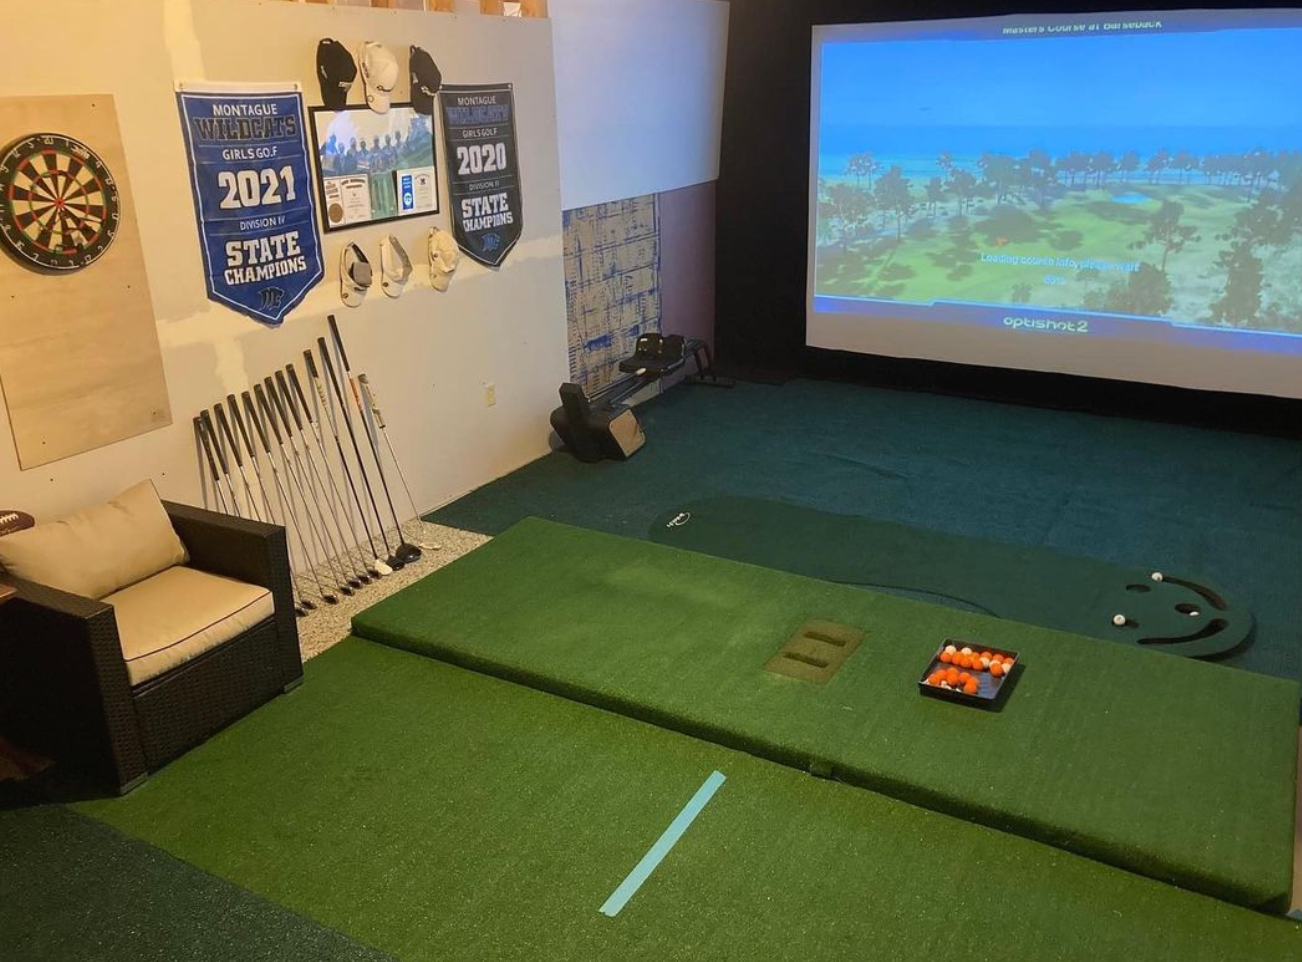 Optishot 2 Golf Simulator Launch Monitor Basement simulator setup.